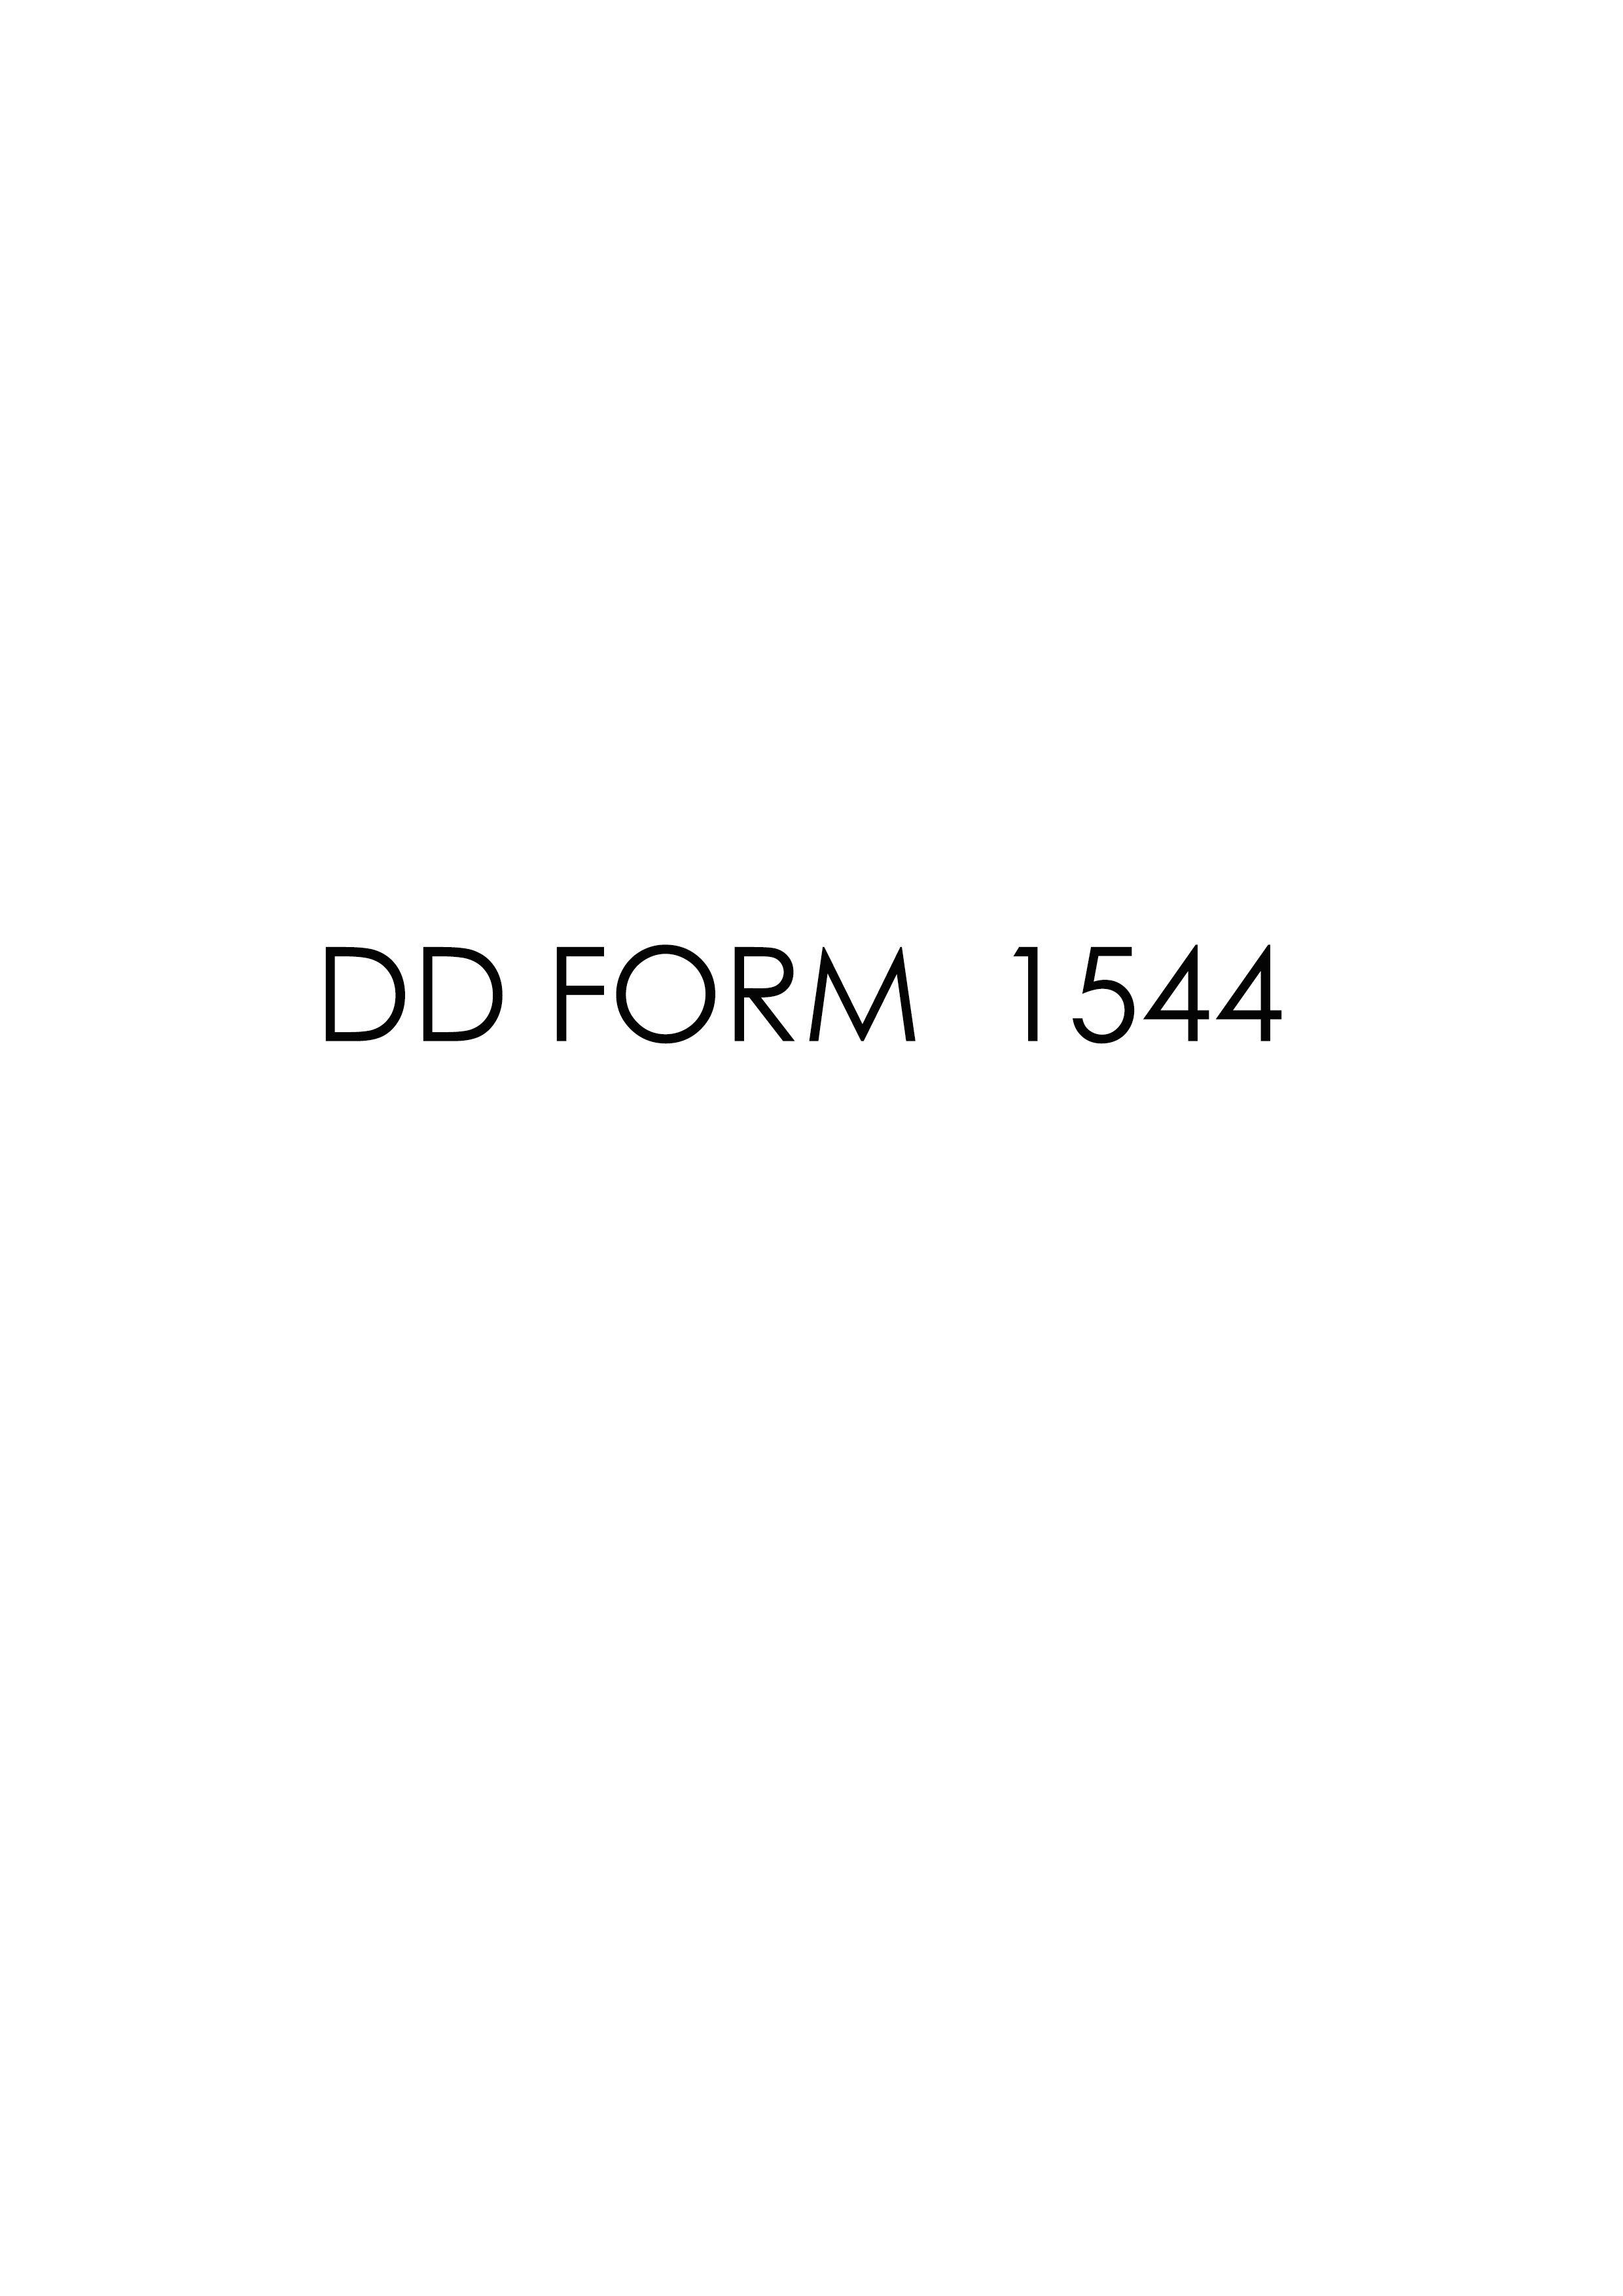 Download dd 1544 Form